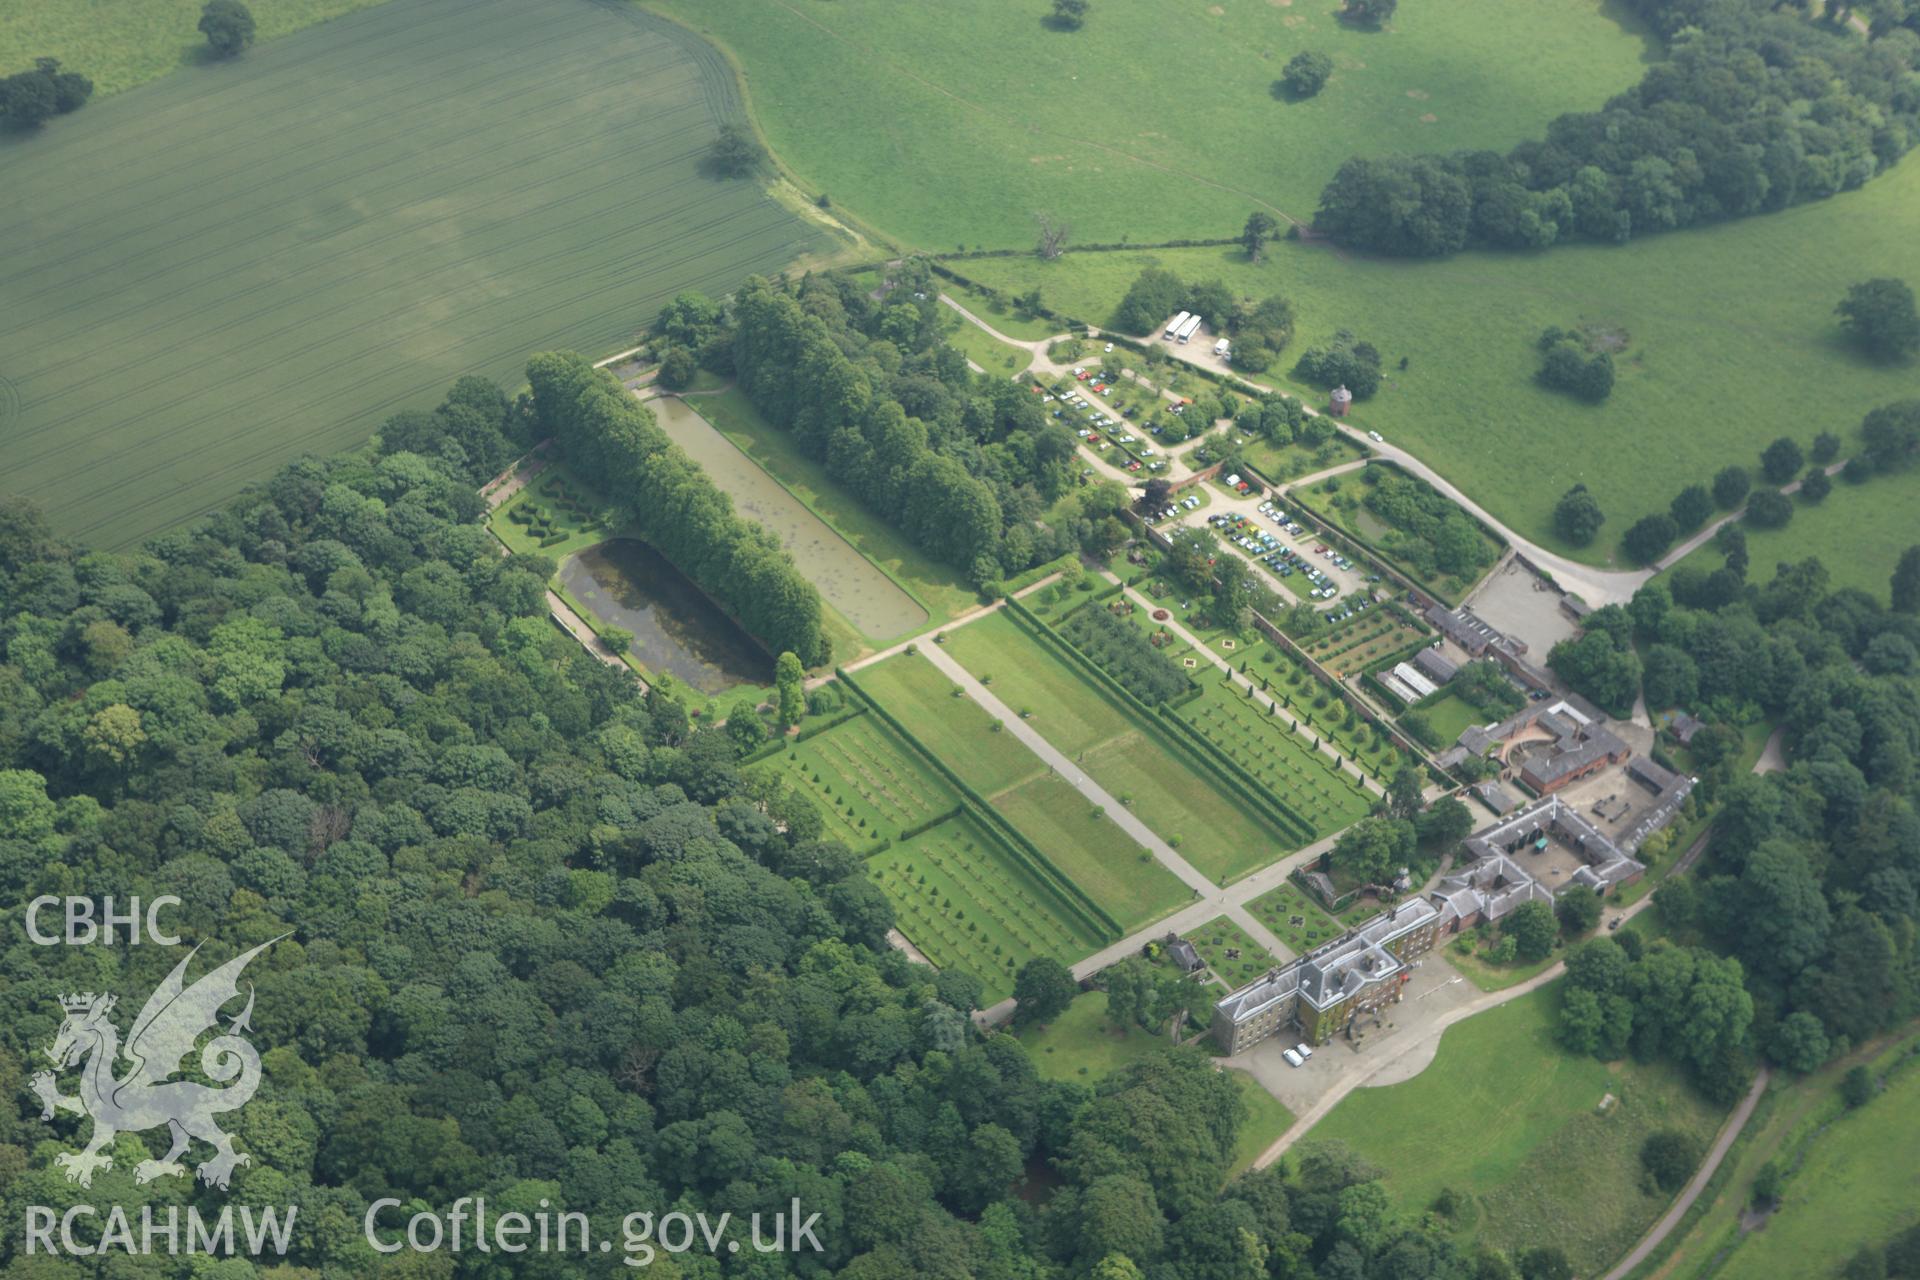 RCAHMW colour oblique aerial photograph of Erddig Park Garden, Wrexham. Taken on 29 June 2009 by Toby Driver